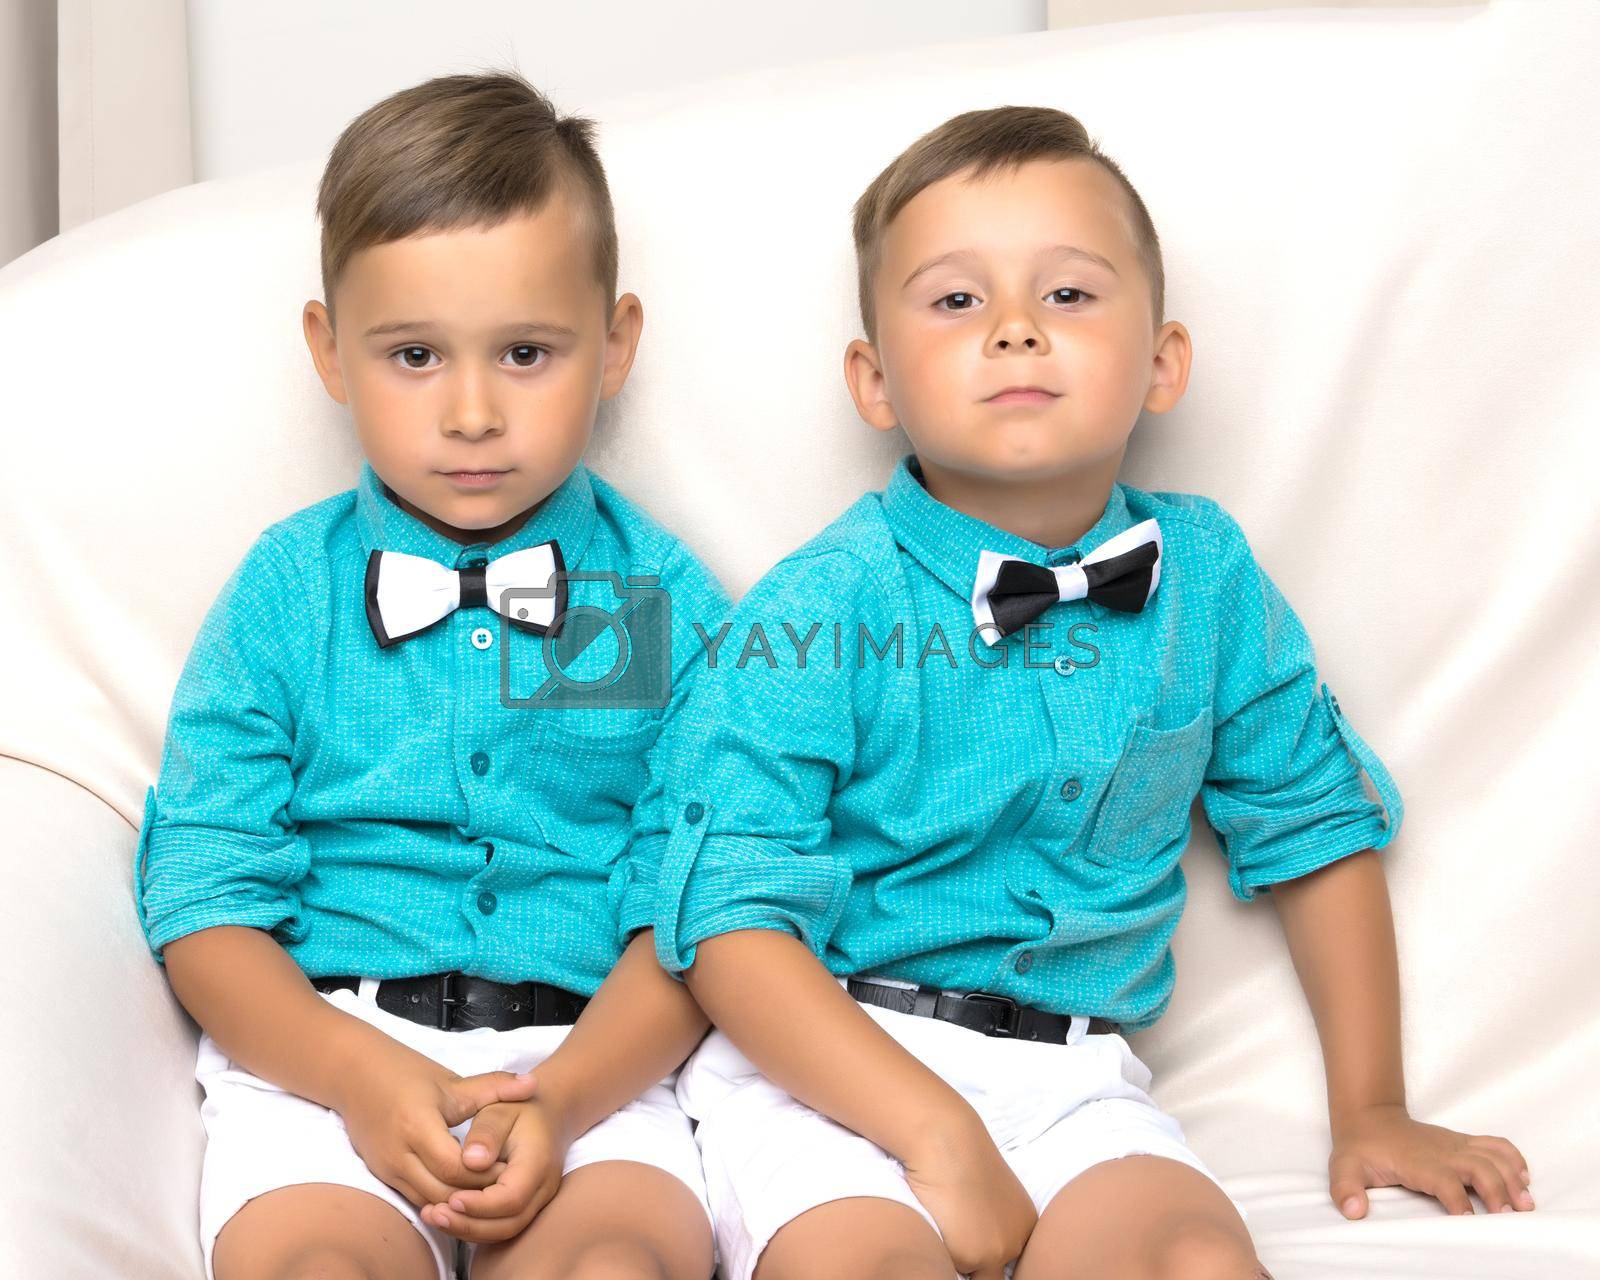 Royalty free image of Two sad Gemini boys by kolesnikov_studio